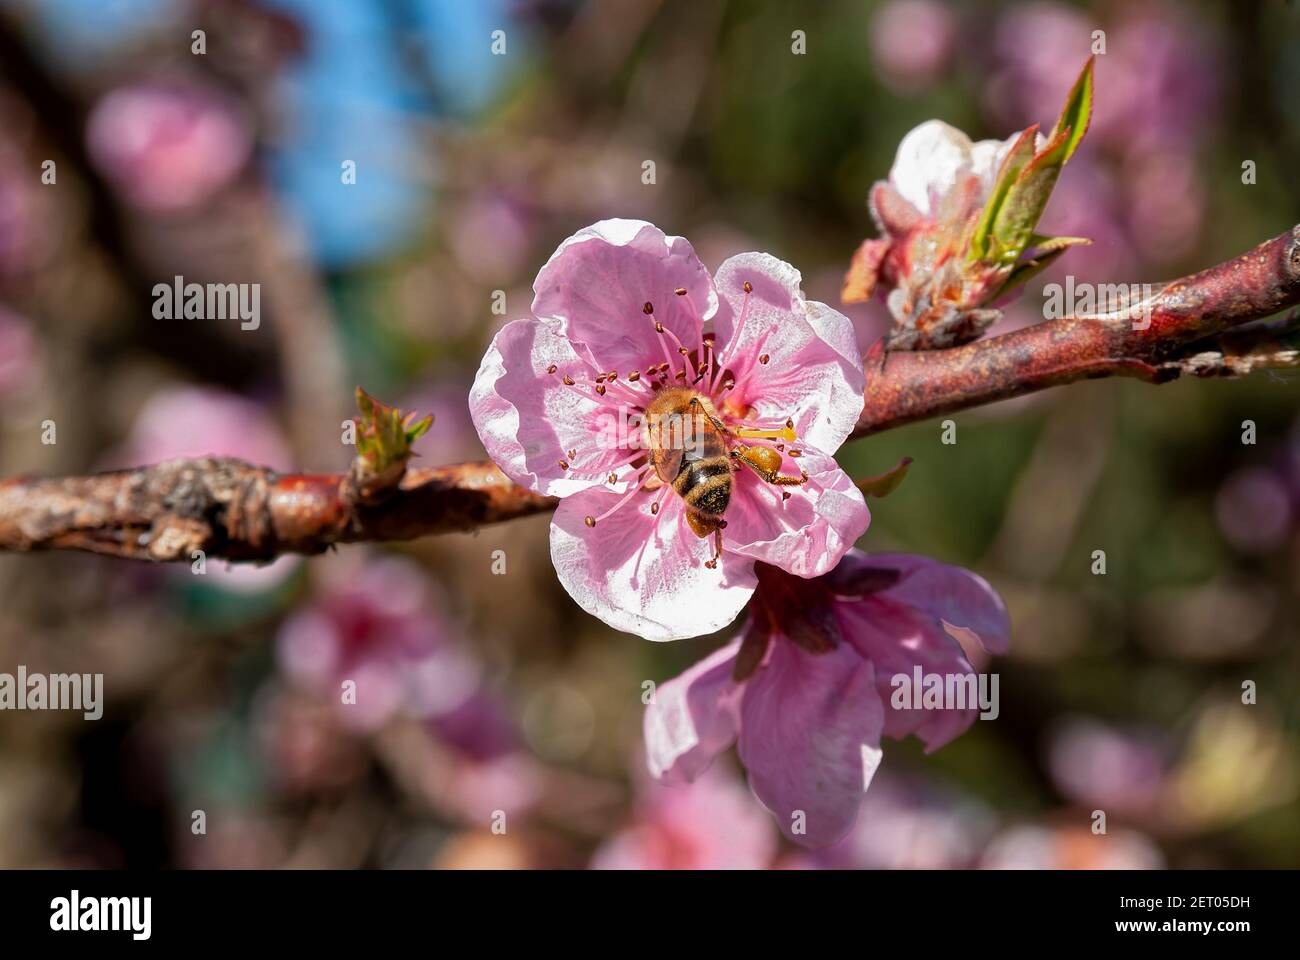 Recolección de polen de abejas (Apis mellifera carnica), flor de melocotón. Foto de stock